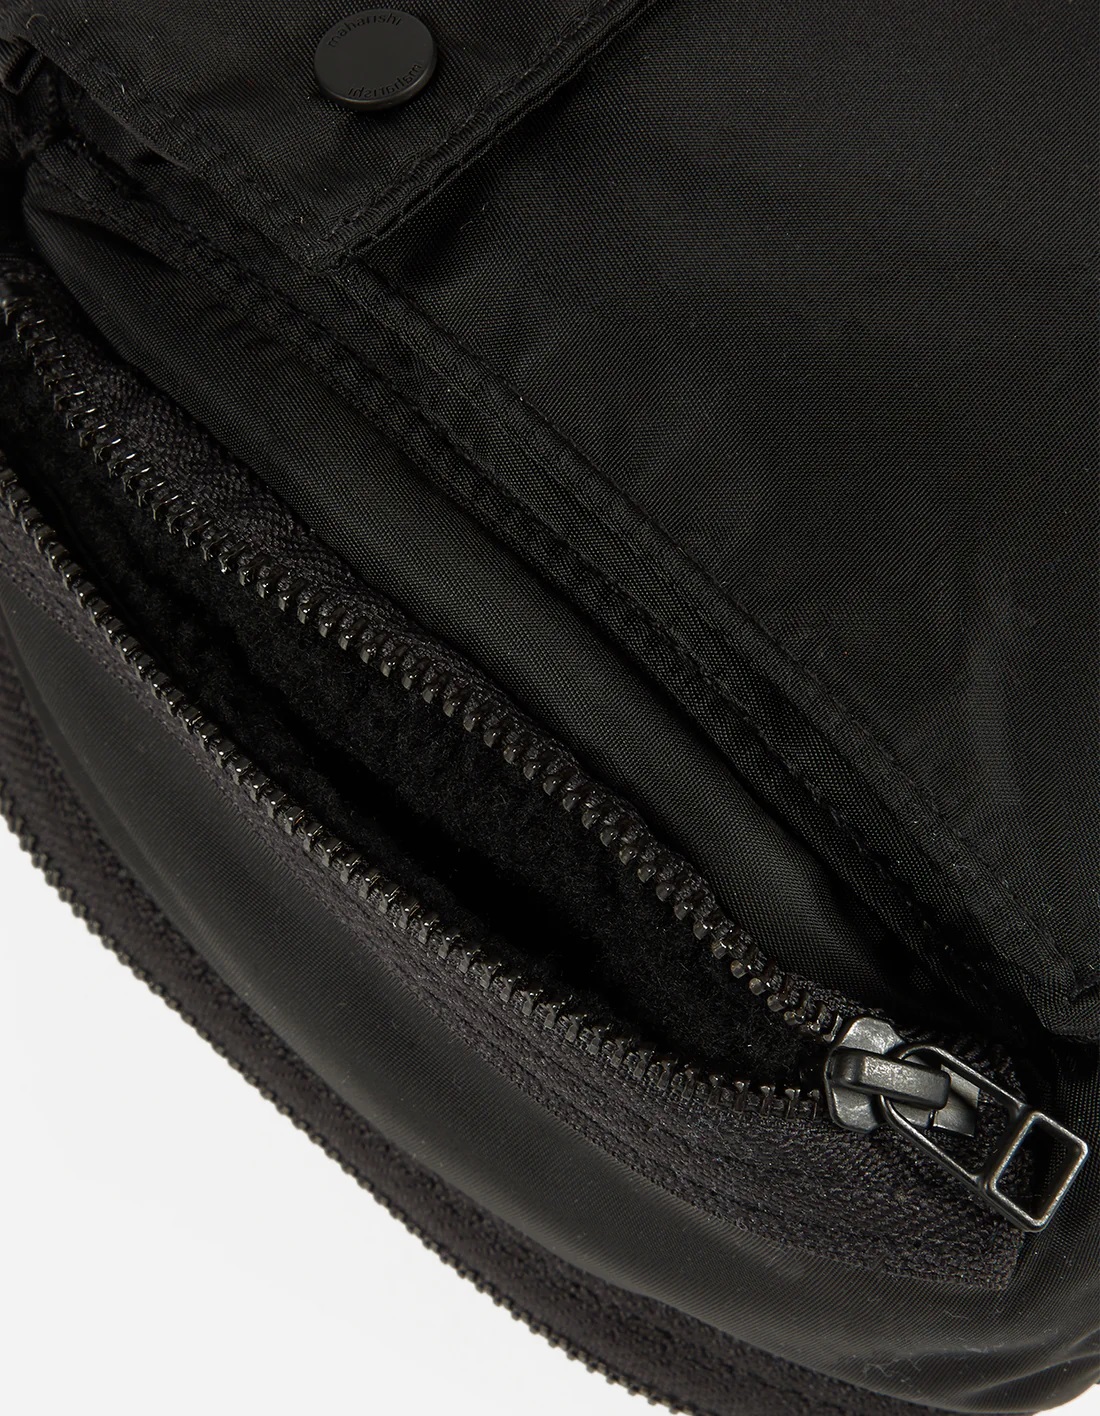 MAHARISHI 9636 Travel Waist Bag in Black